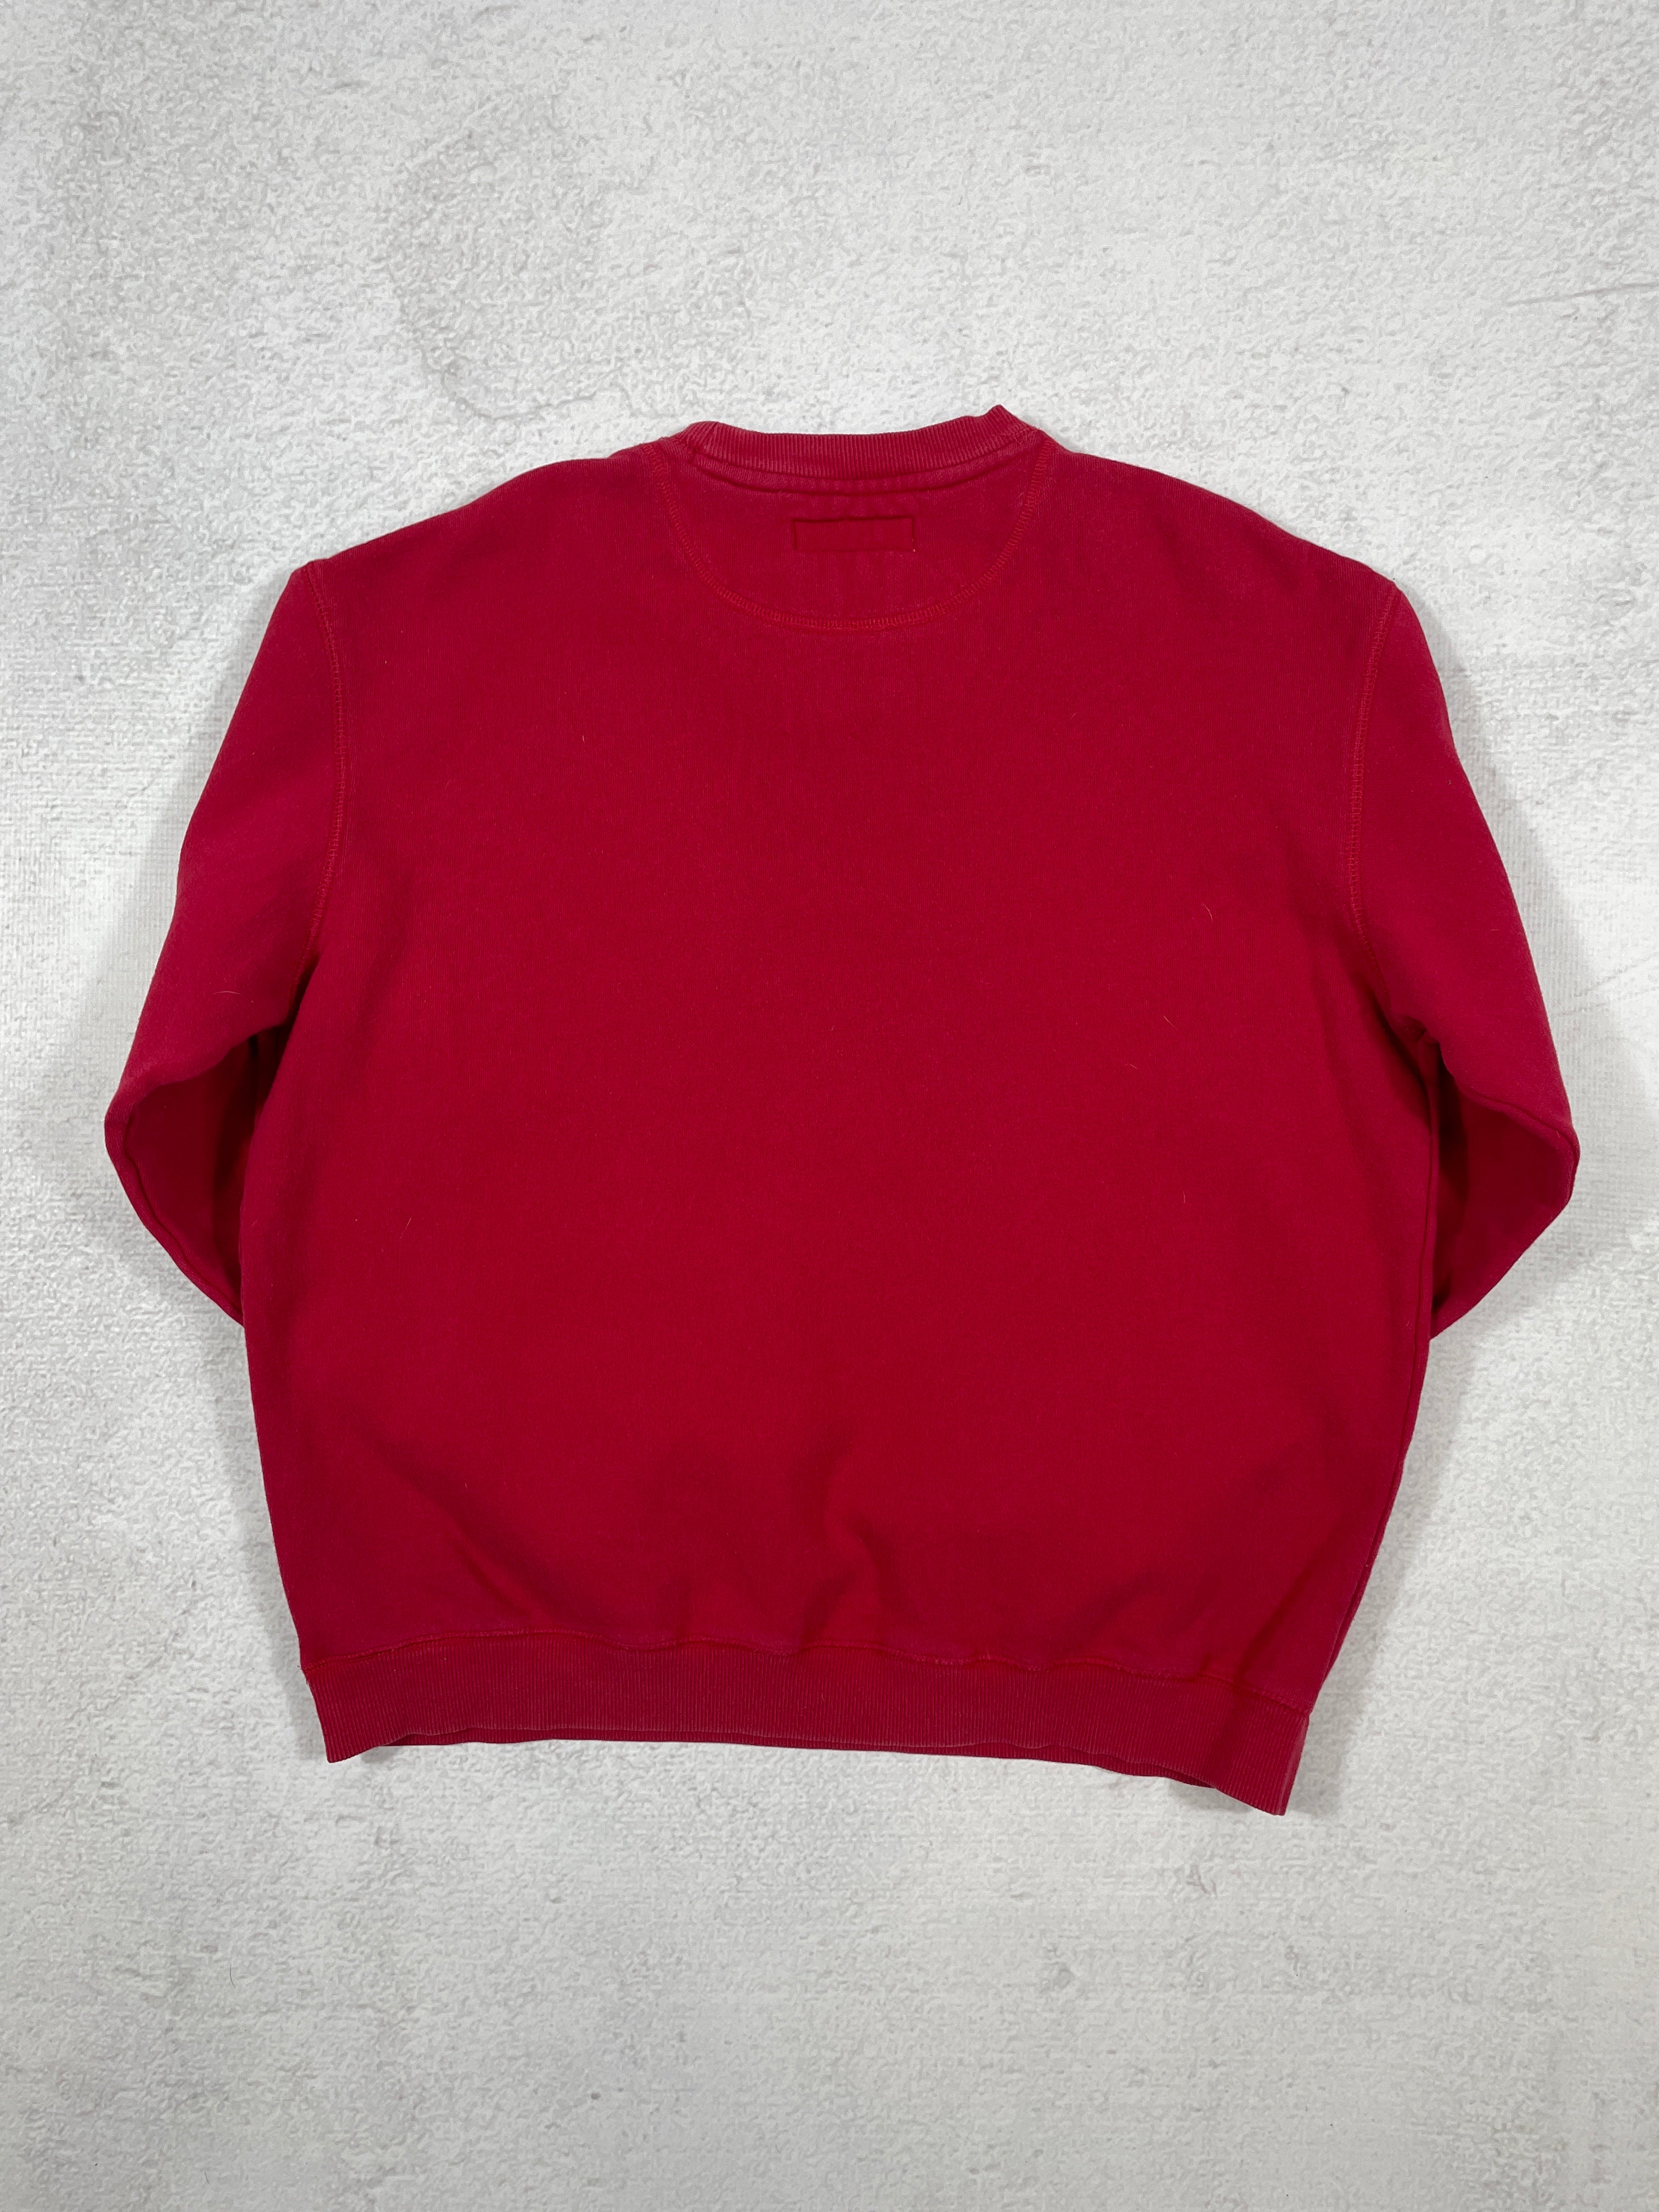 Vintage Fila Crewneck Sweatshirt - Men's Medium